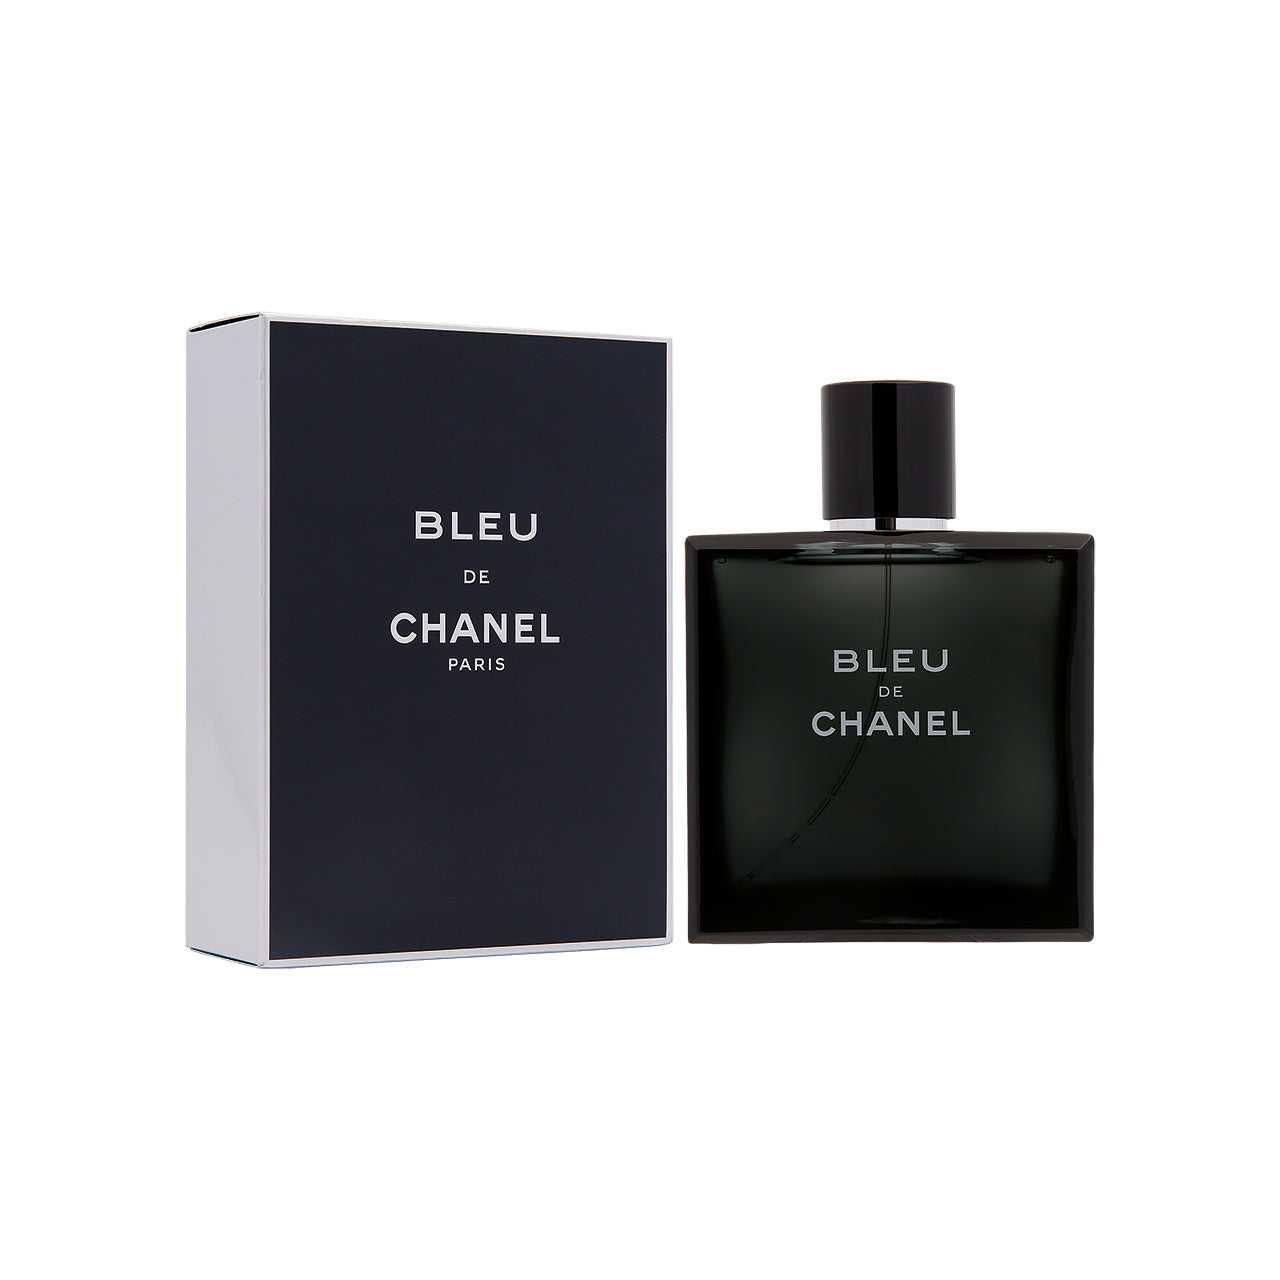 Chanel BLEU DE CHANEL Eau De Toilette Spray 100ml